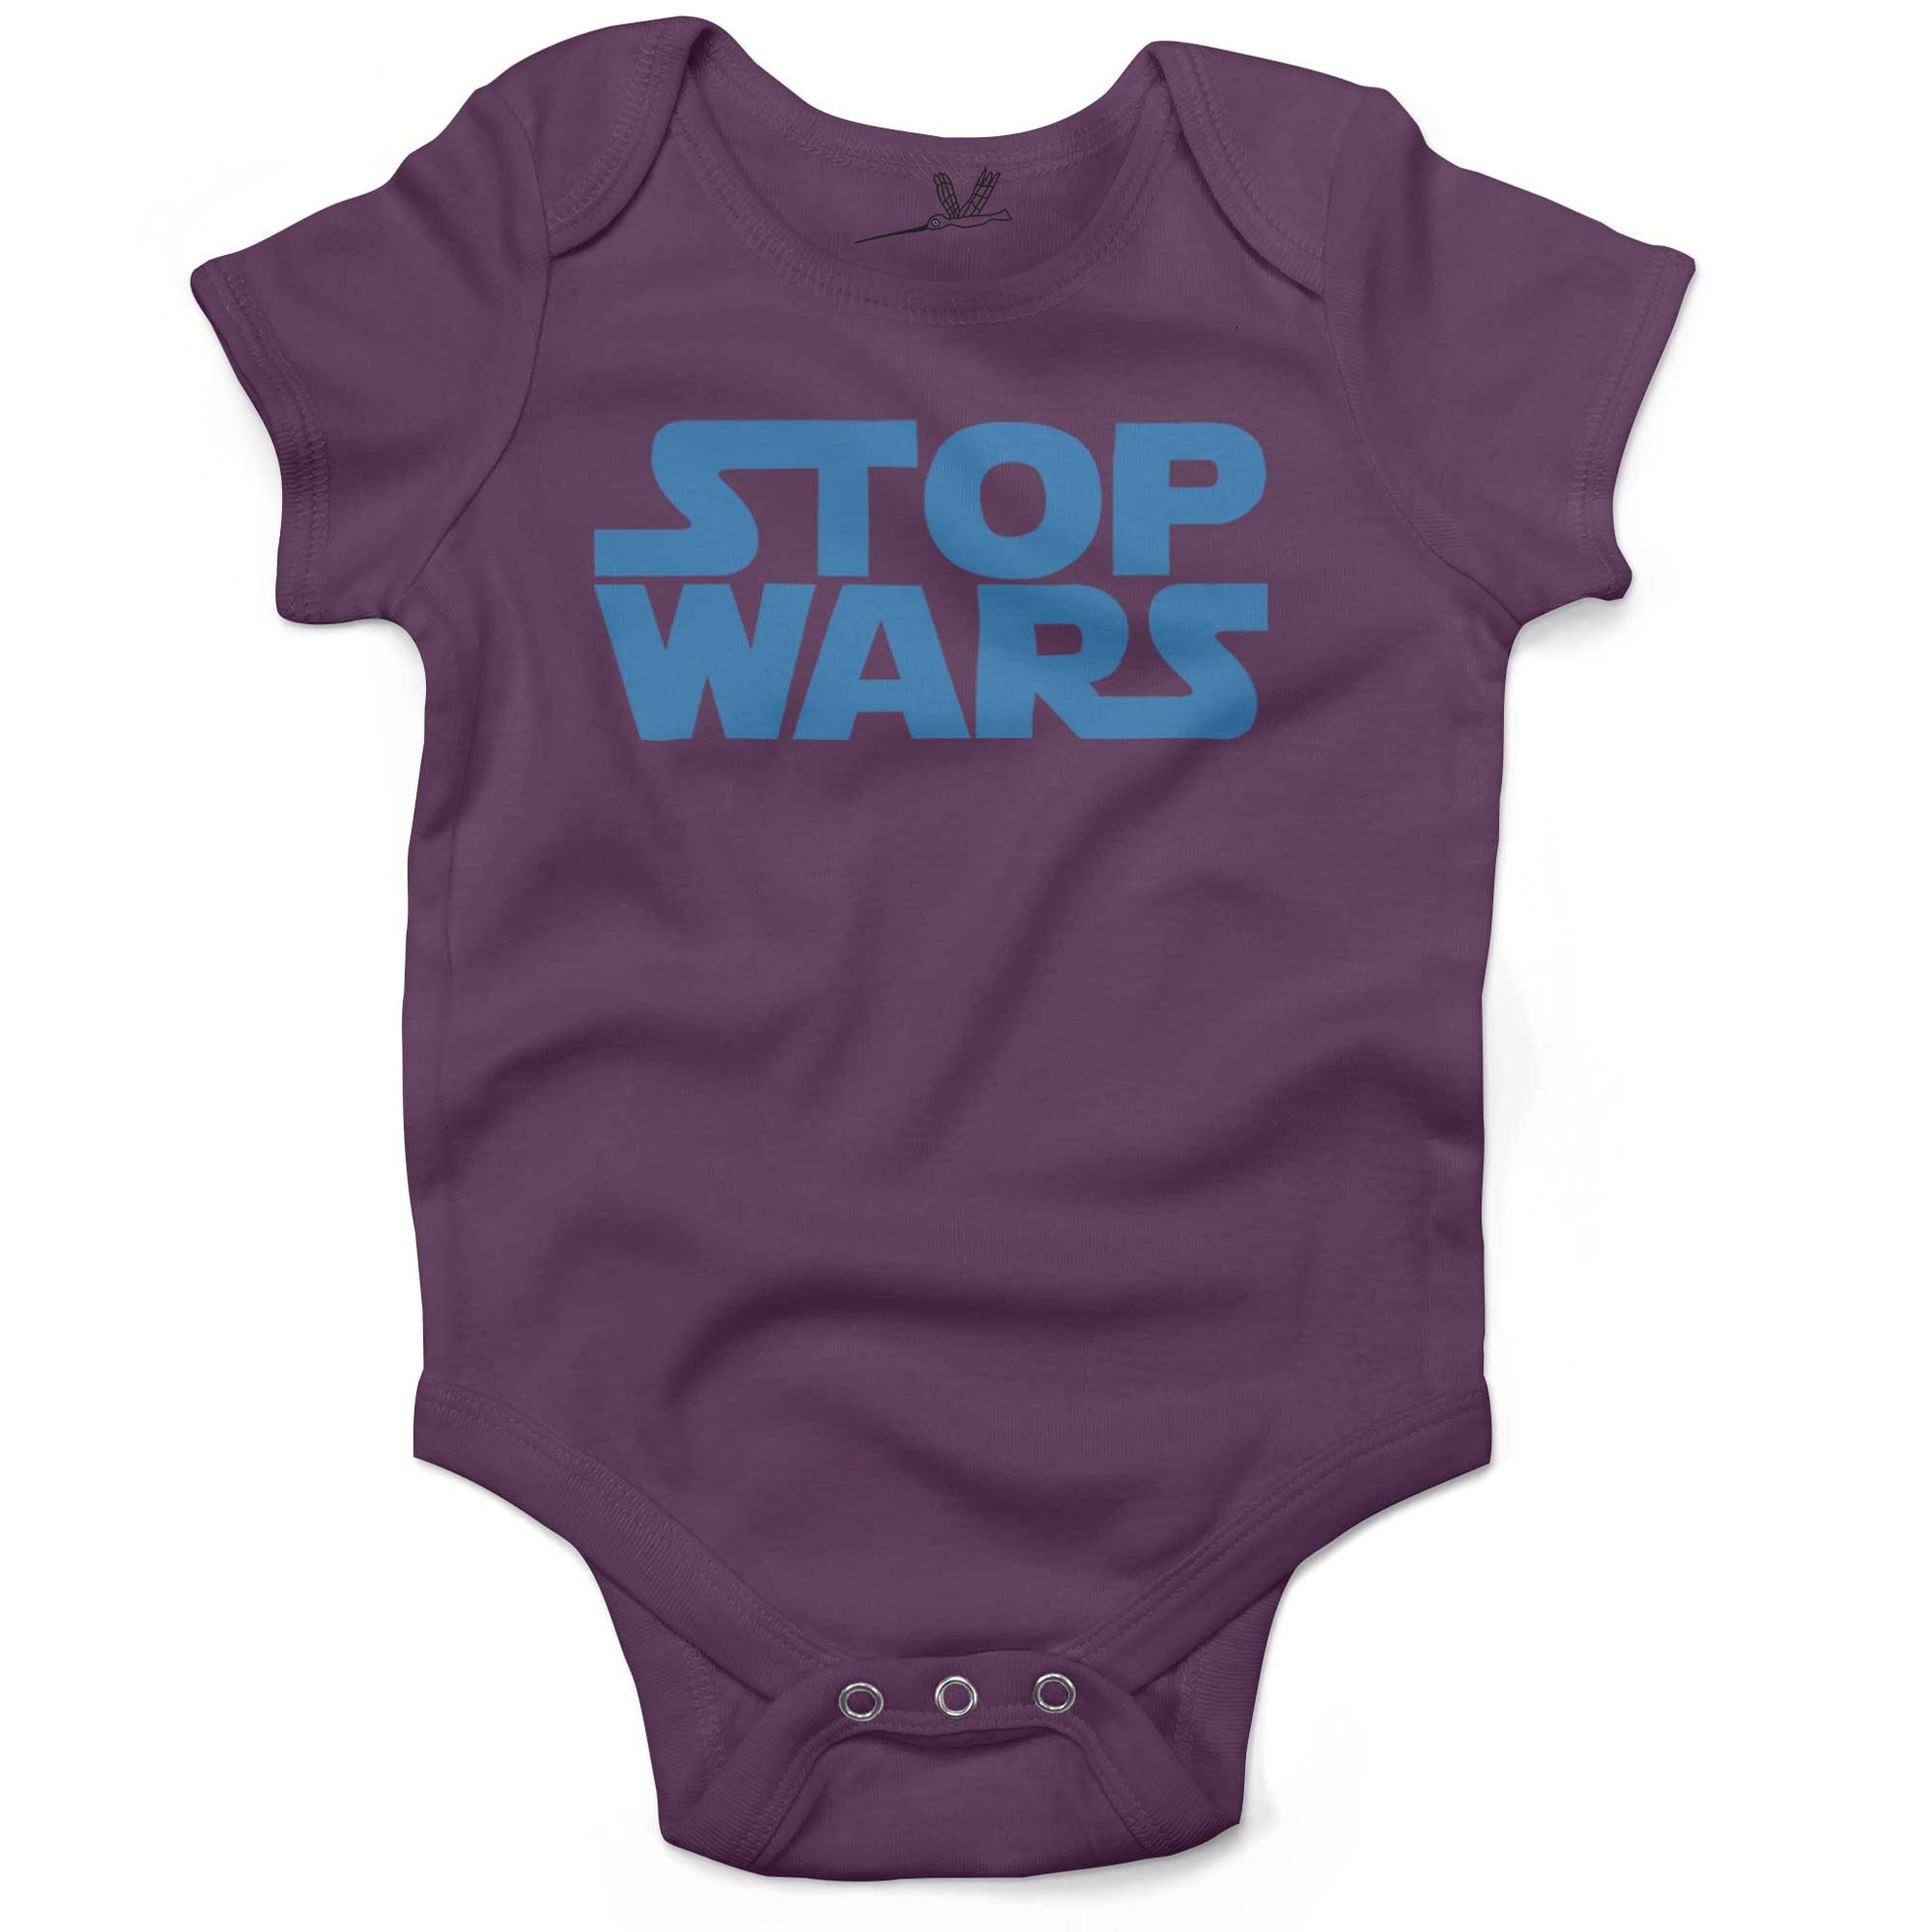 STOP WARS Infant Bodysuit or Raglan Baby Tee-Organic Purple-3-6 months